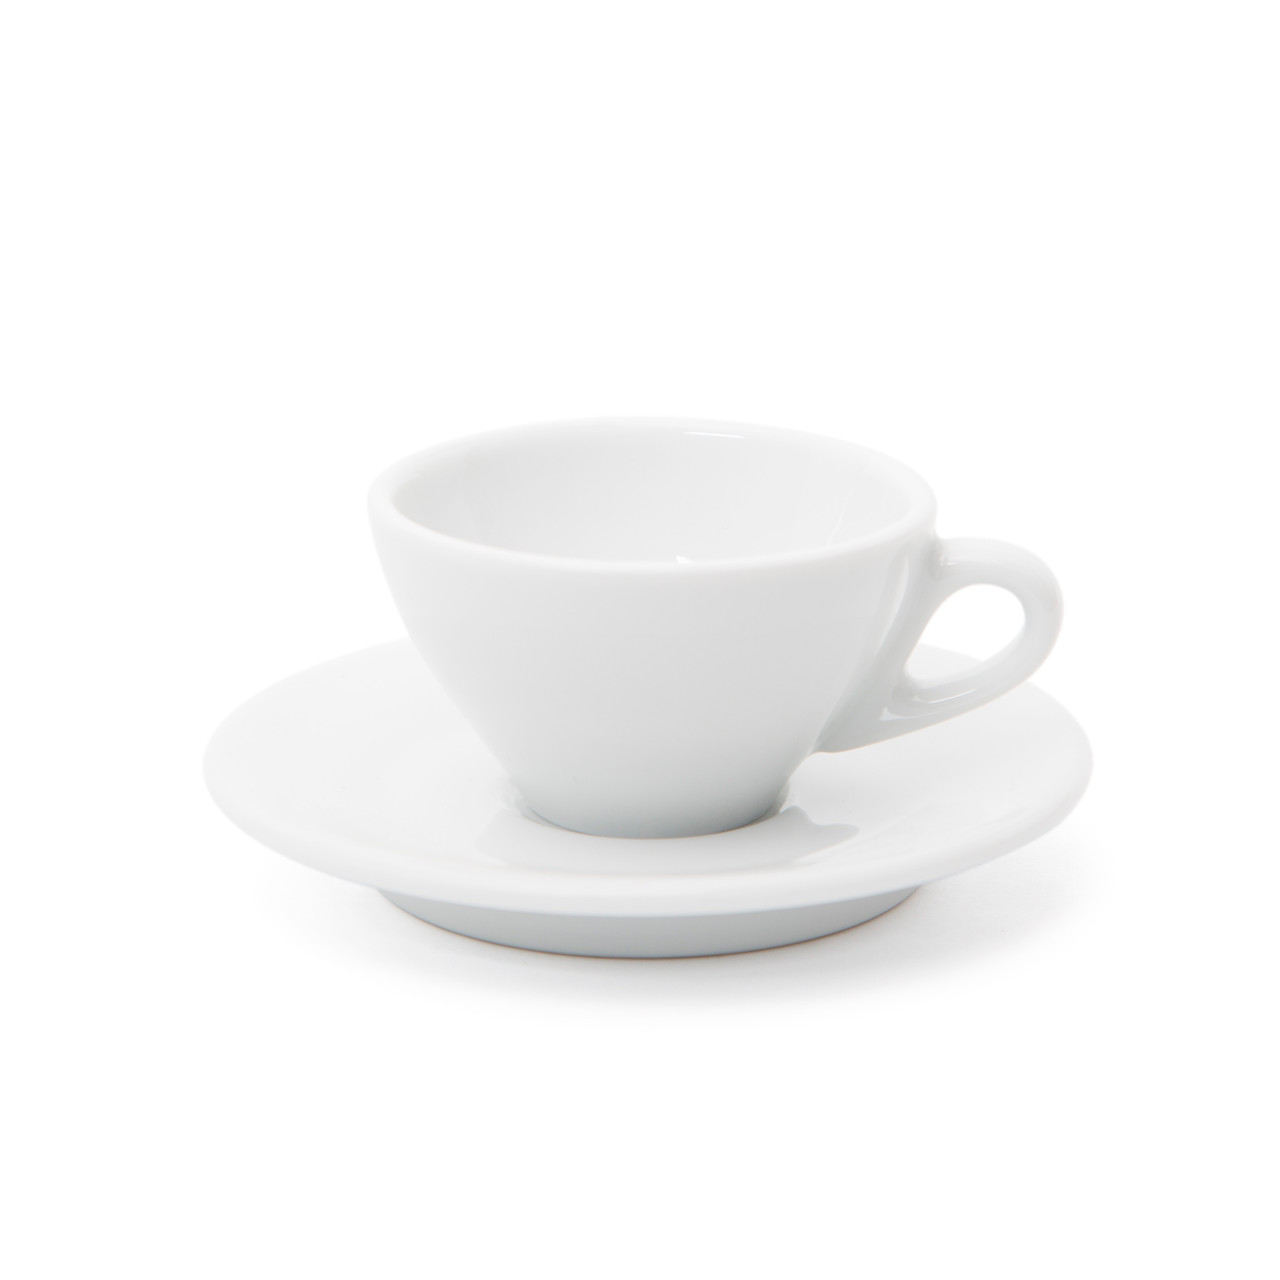 White Espresso Coffee Cups (Set of 4)- 2.7oz